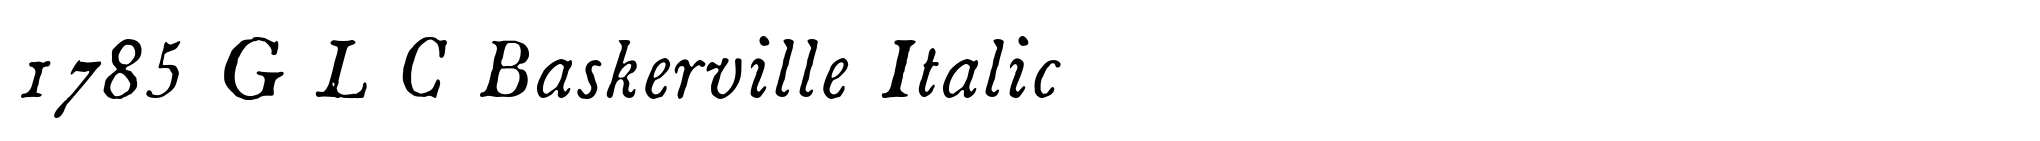 1785 GLC Baskerville Italic image